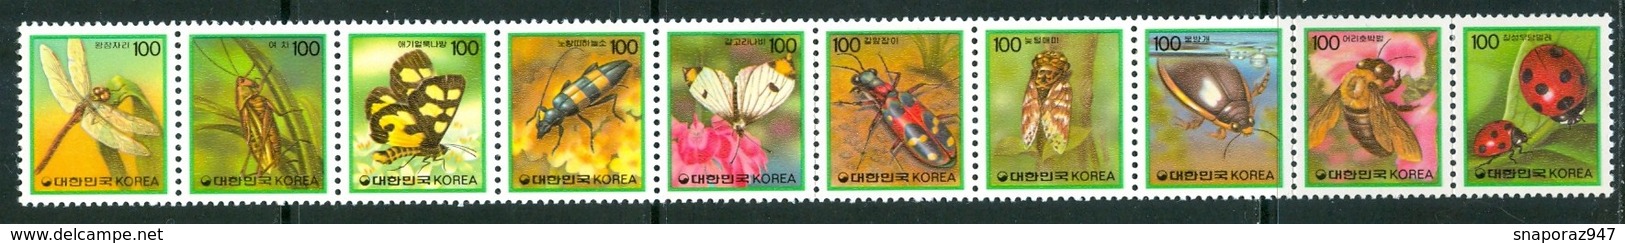 1991 South Korea Coleotteri Beetles Insetti Insects Insectes Set MNH** Ye140 - Corea Del Sud